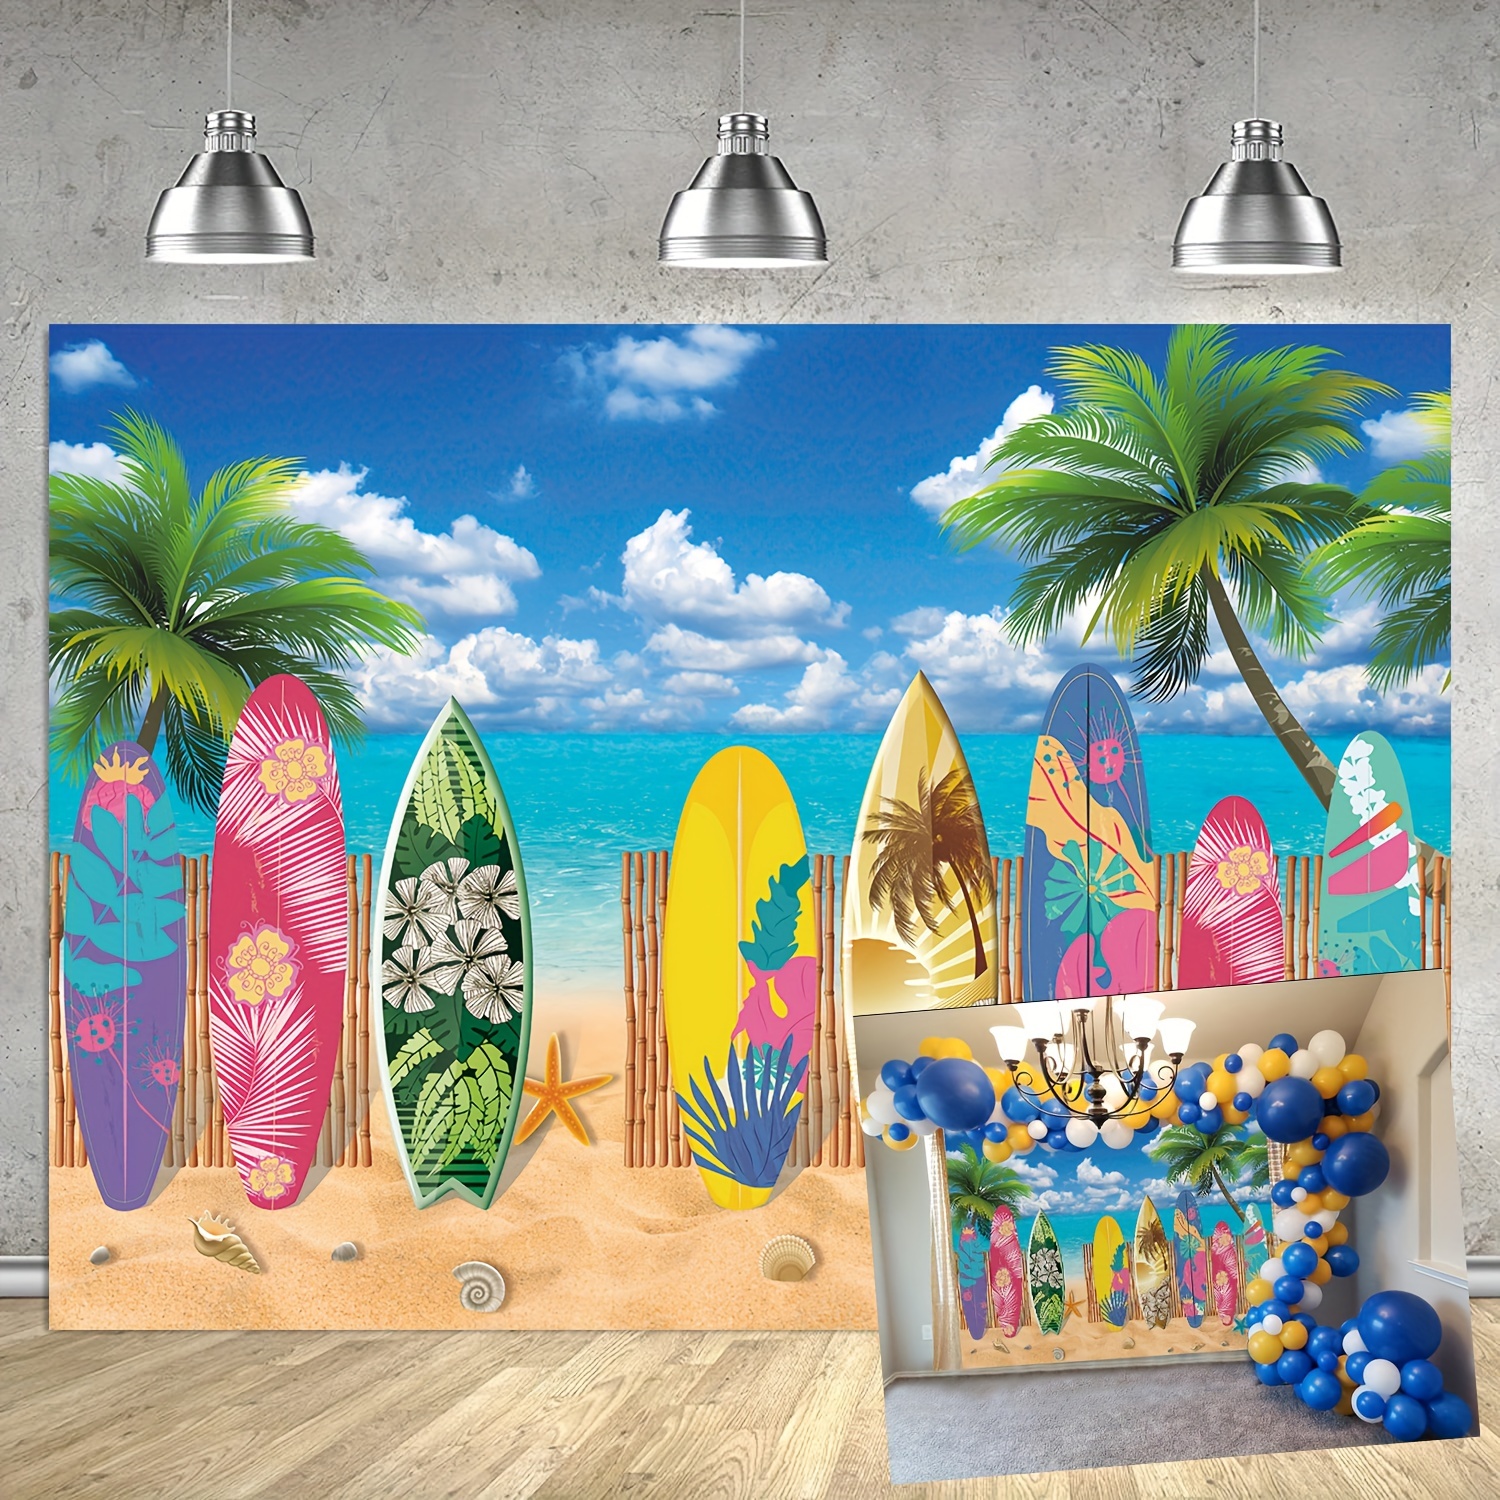 Decoración tablas surf  Surf decor, Beach theme decor, Surfboard decor